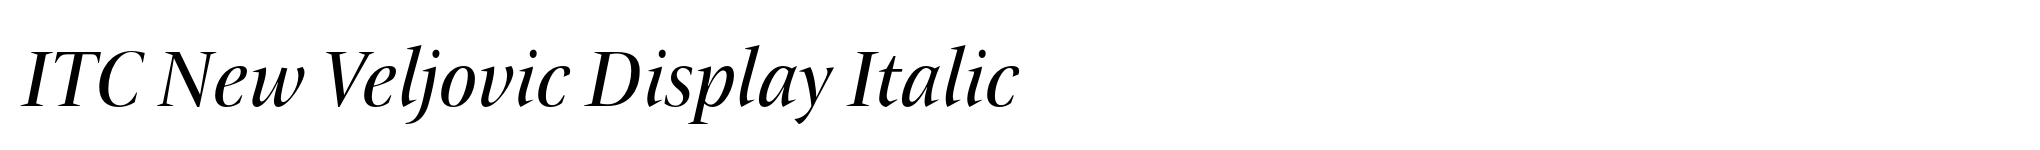 ITC New Veljovic Display Italic image